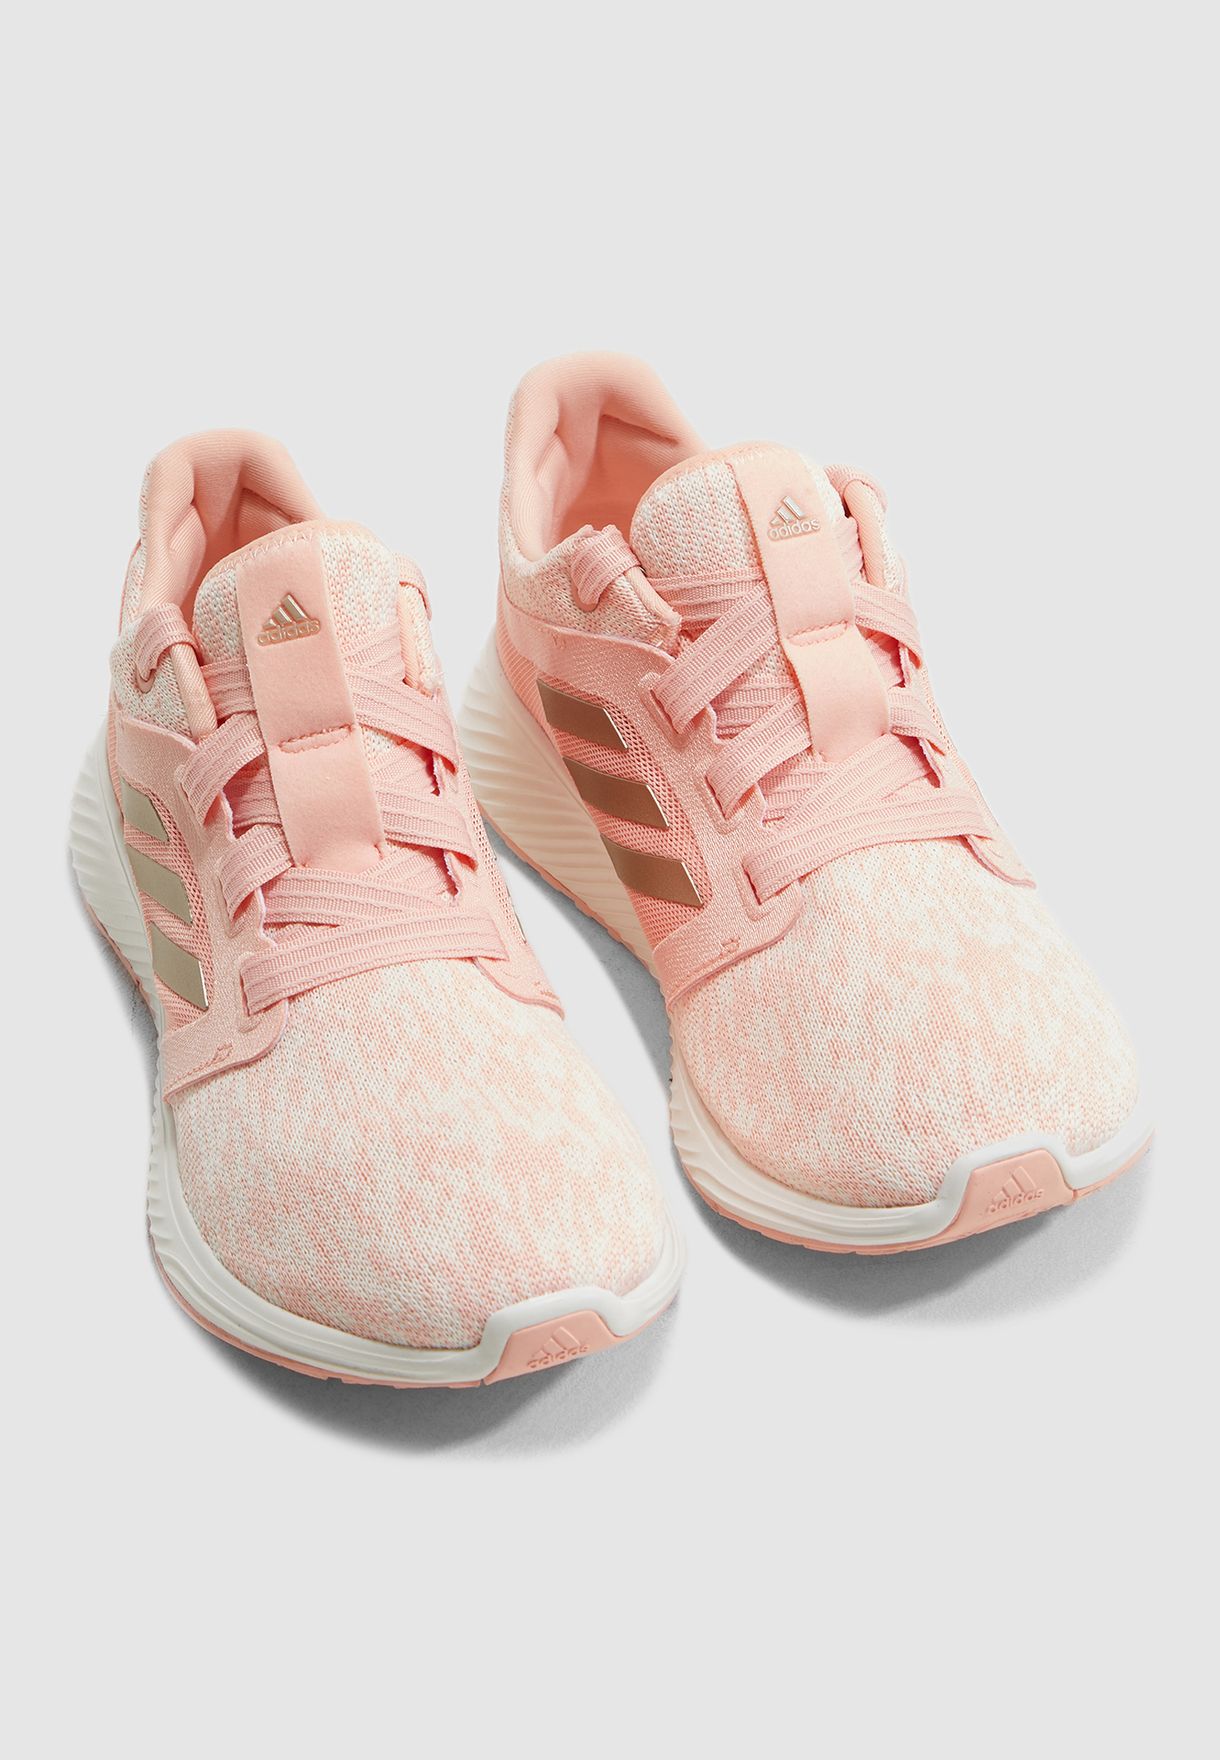 adidas edge lux light pink